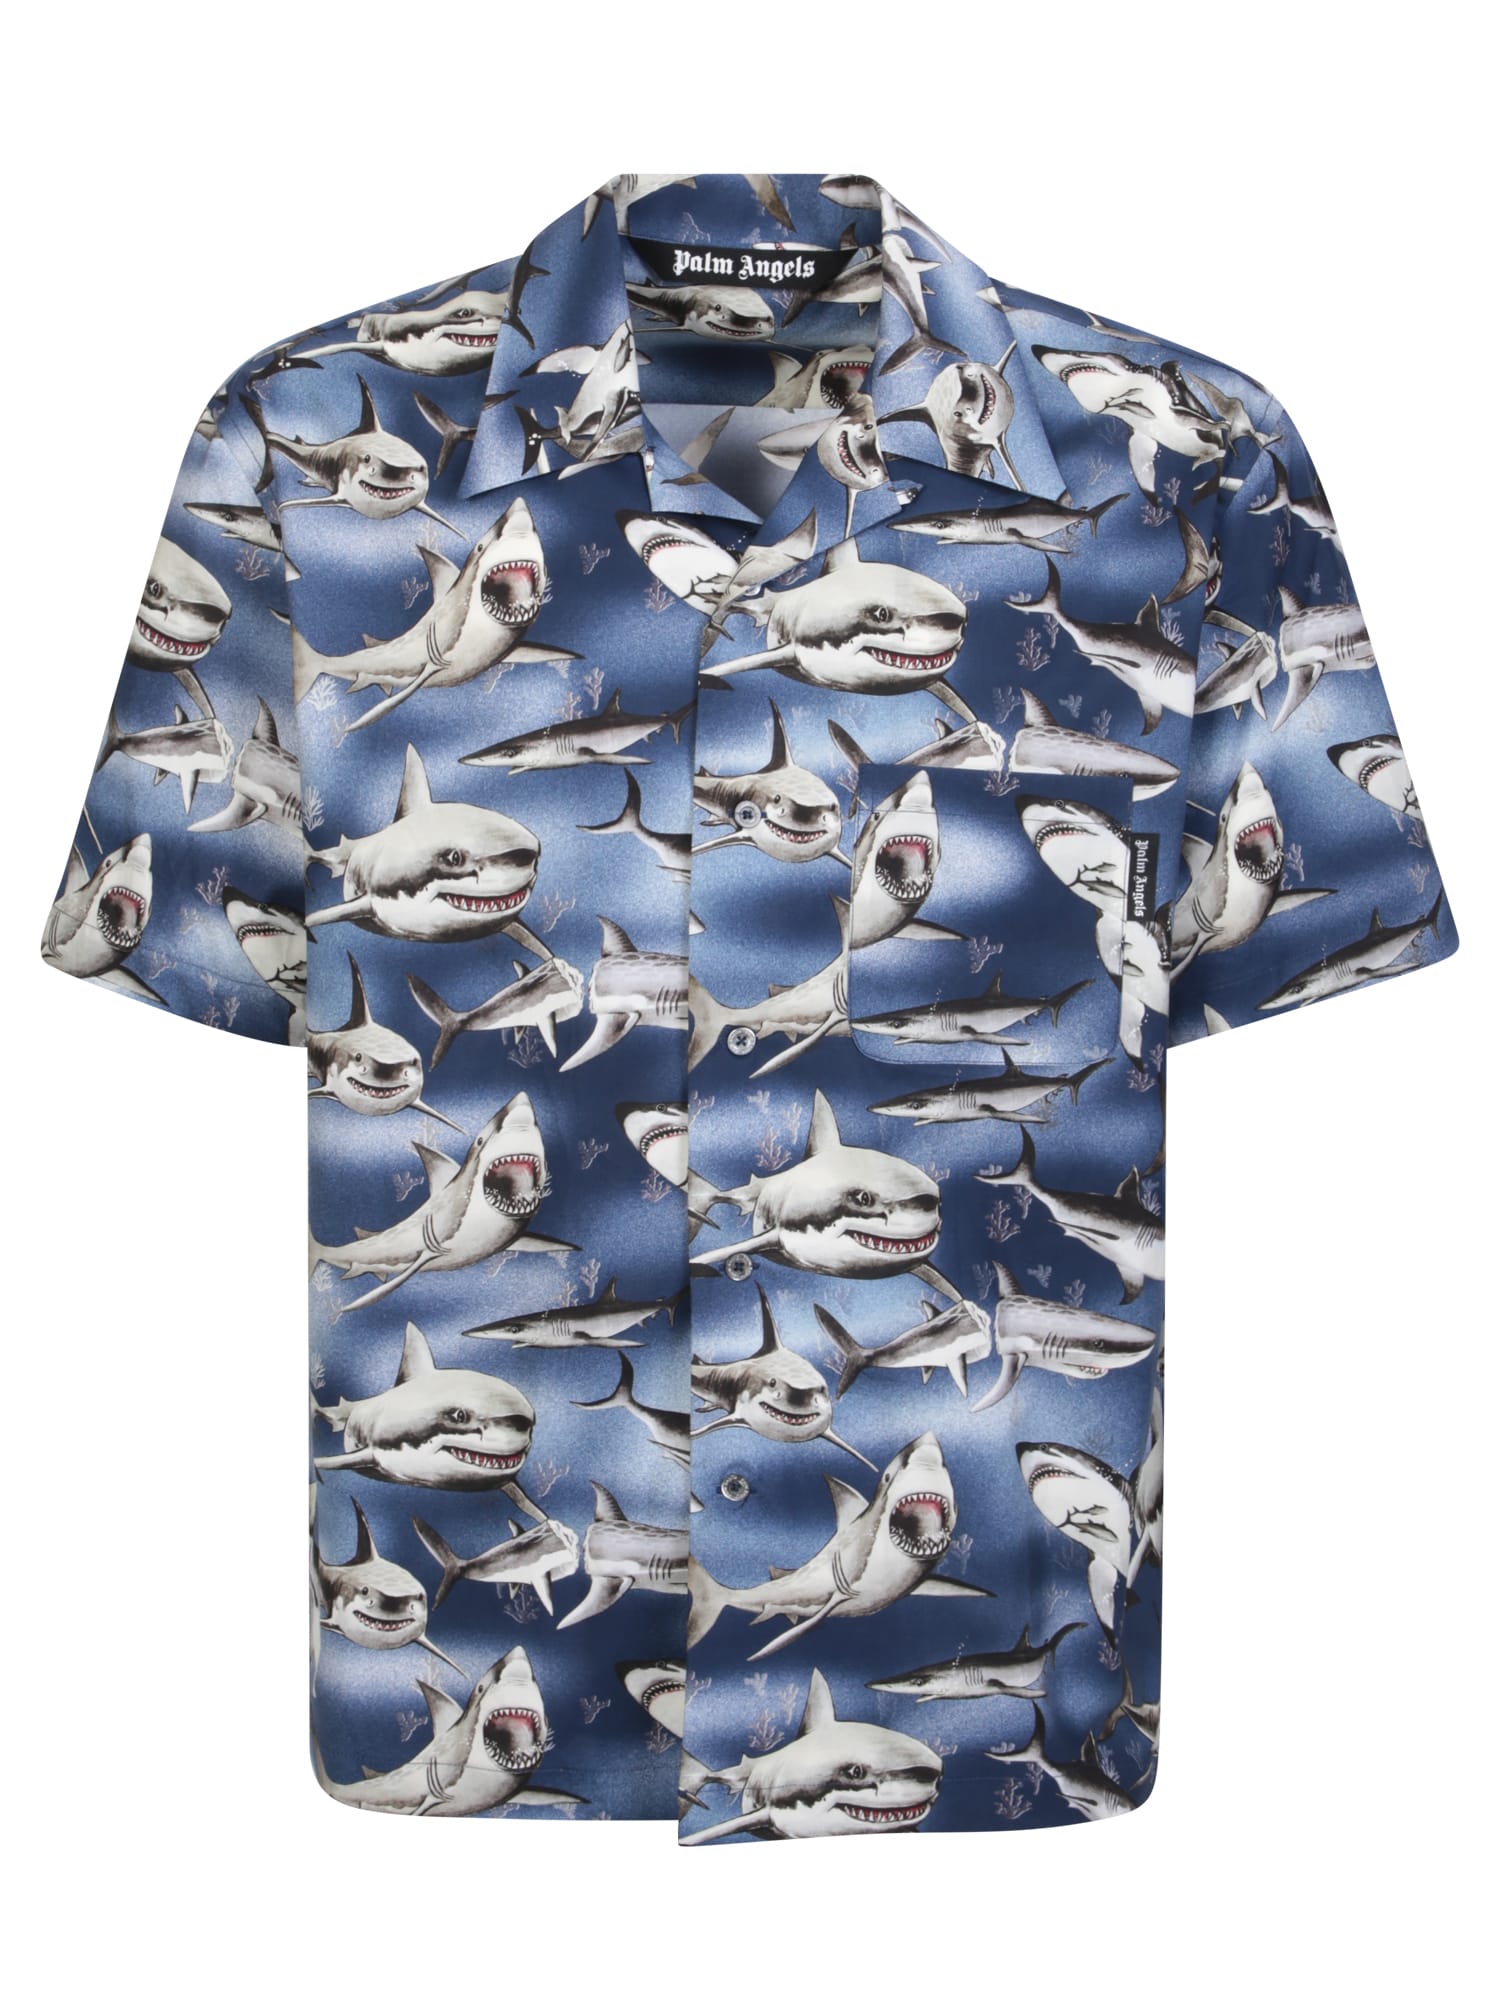 Palm Angels Multicolor Shark Bowling Shirt